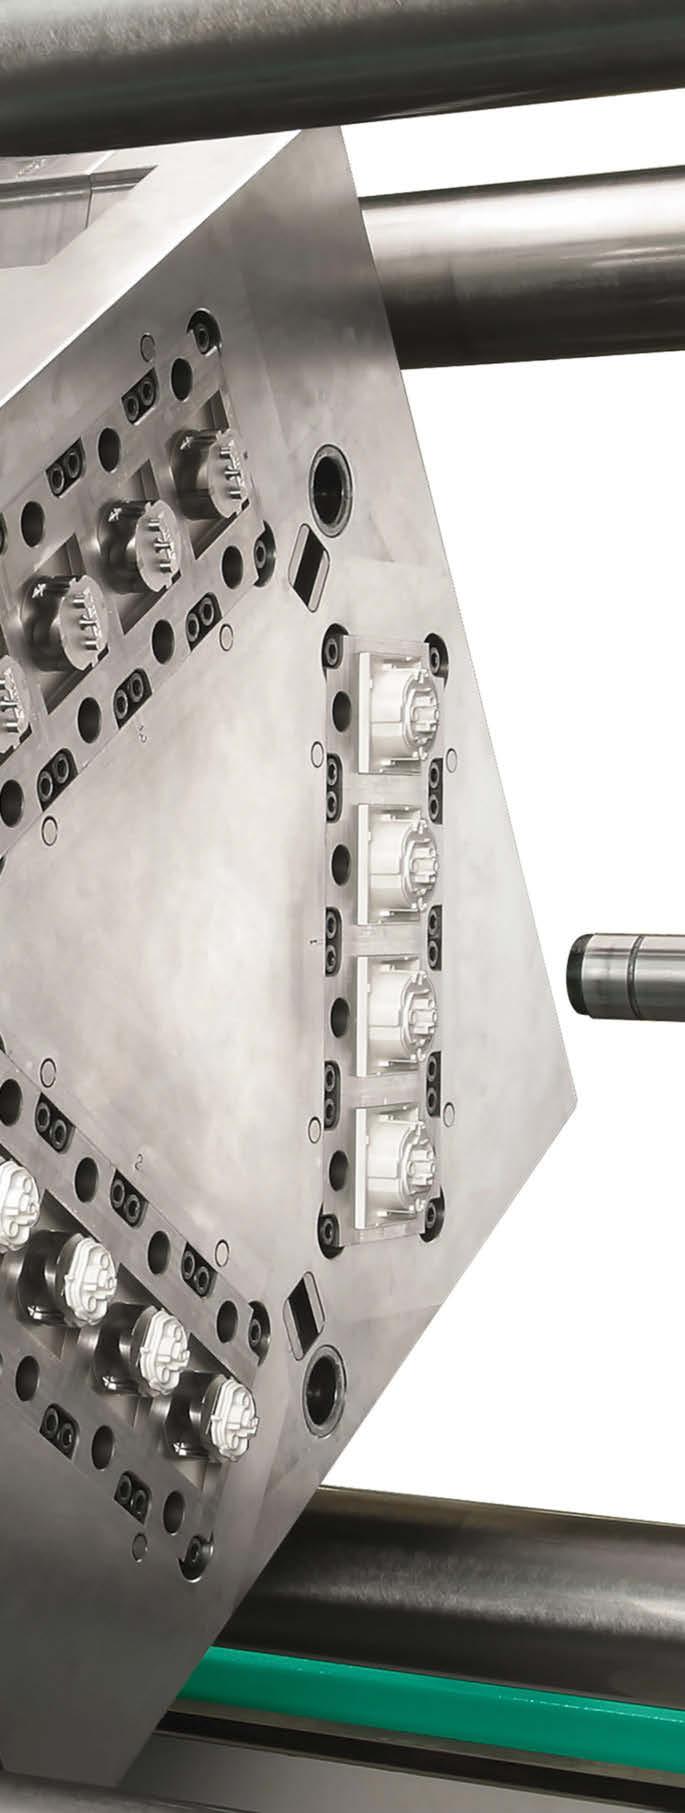 Armature shaft for electric motors: